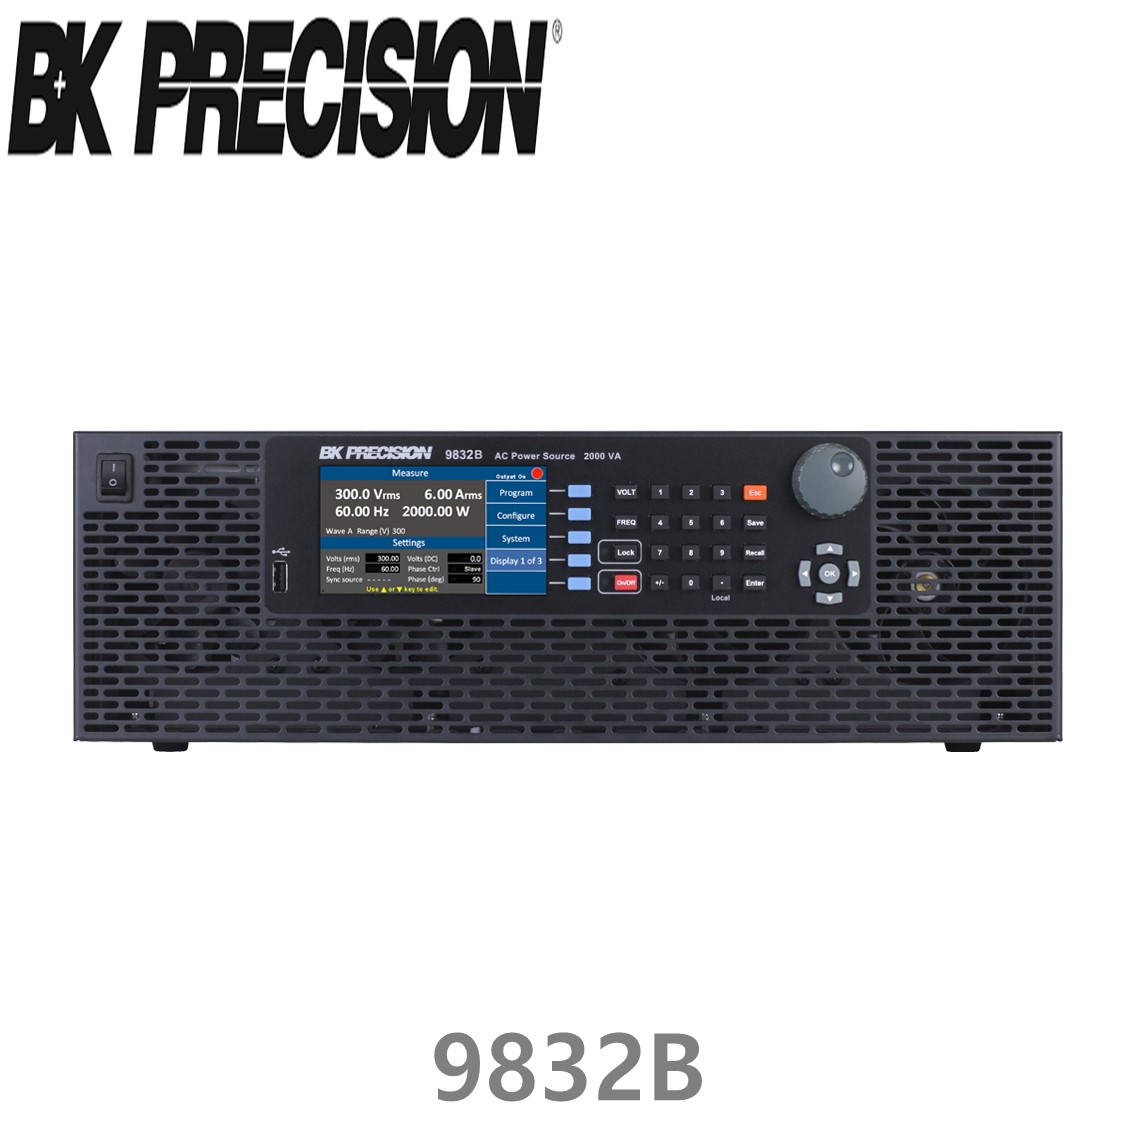 [ BK PRECISION ] BK 9832B, 2000VA, AC 파워소스 B&K 9832B